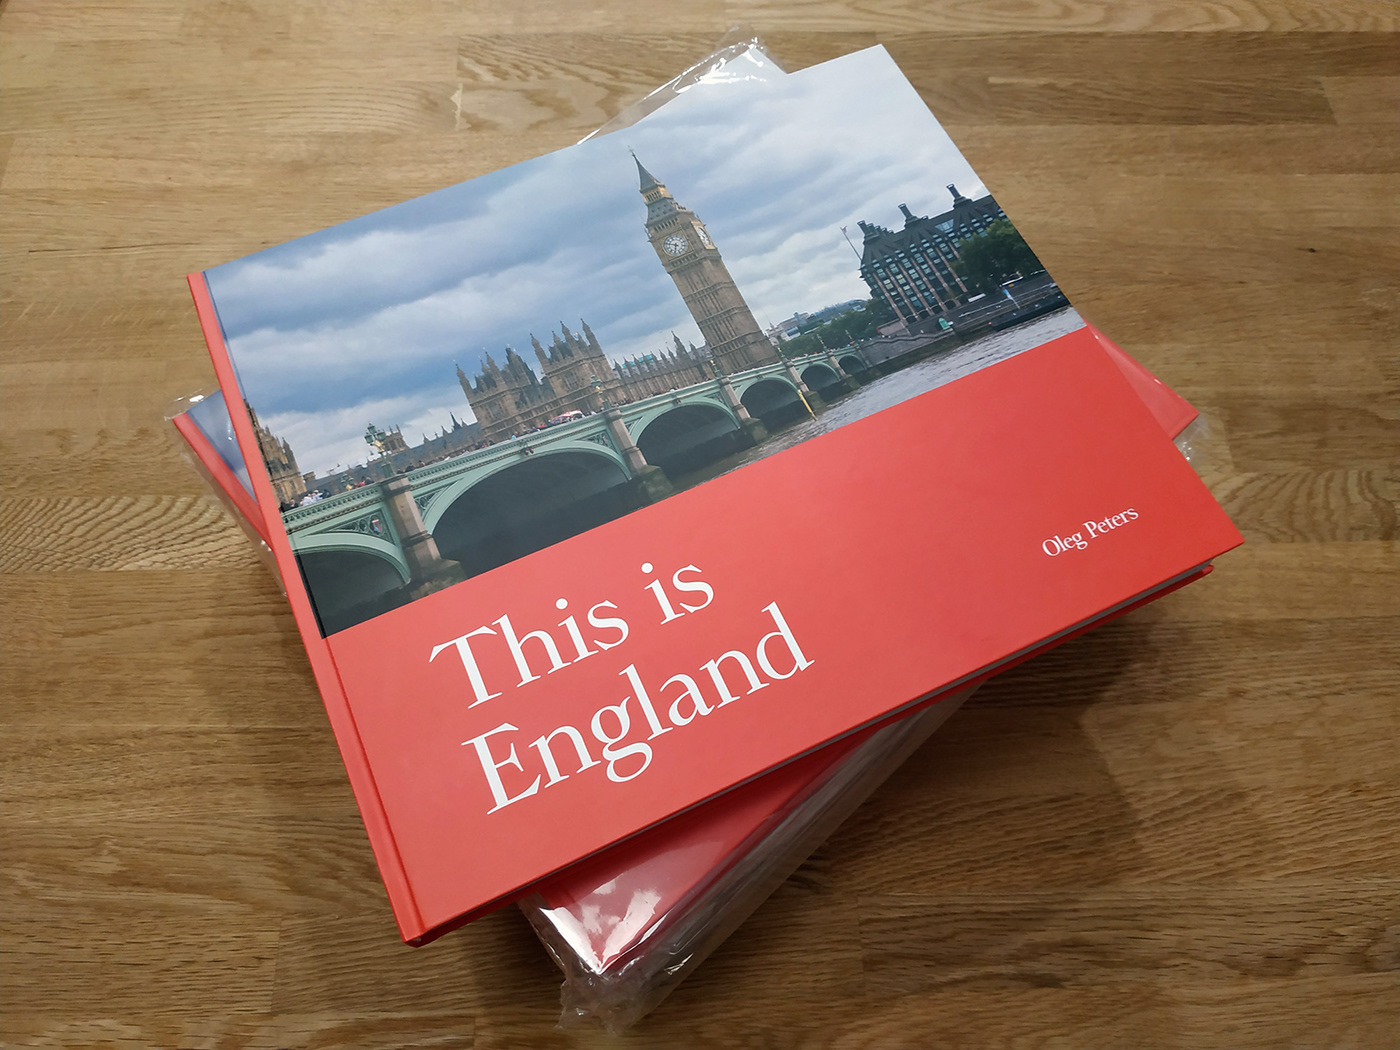 book book design england great britain photo photo book Travel Travel book travel photo travel photography